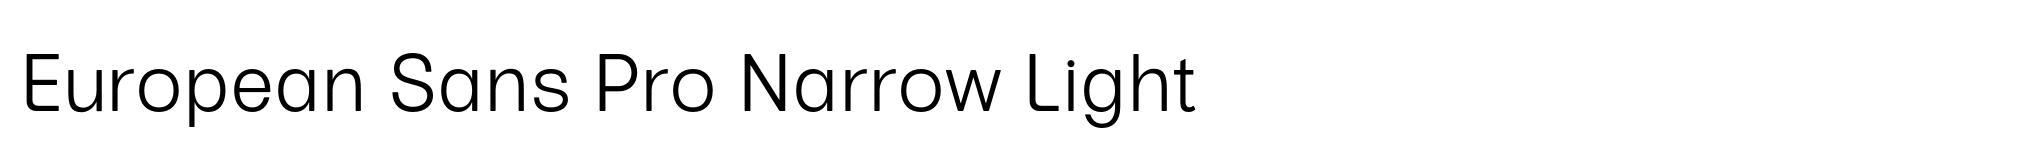 European Sans Pro Narrow Light image